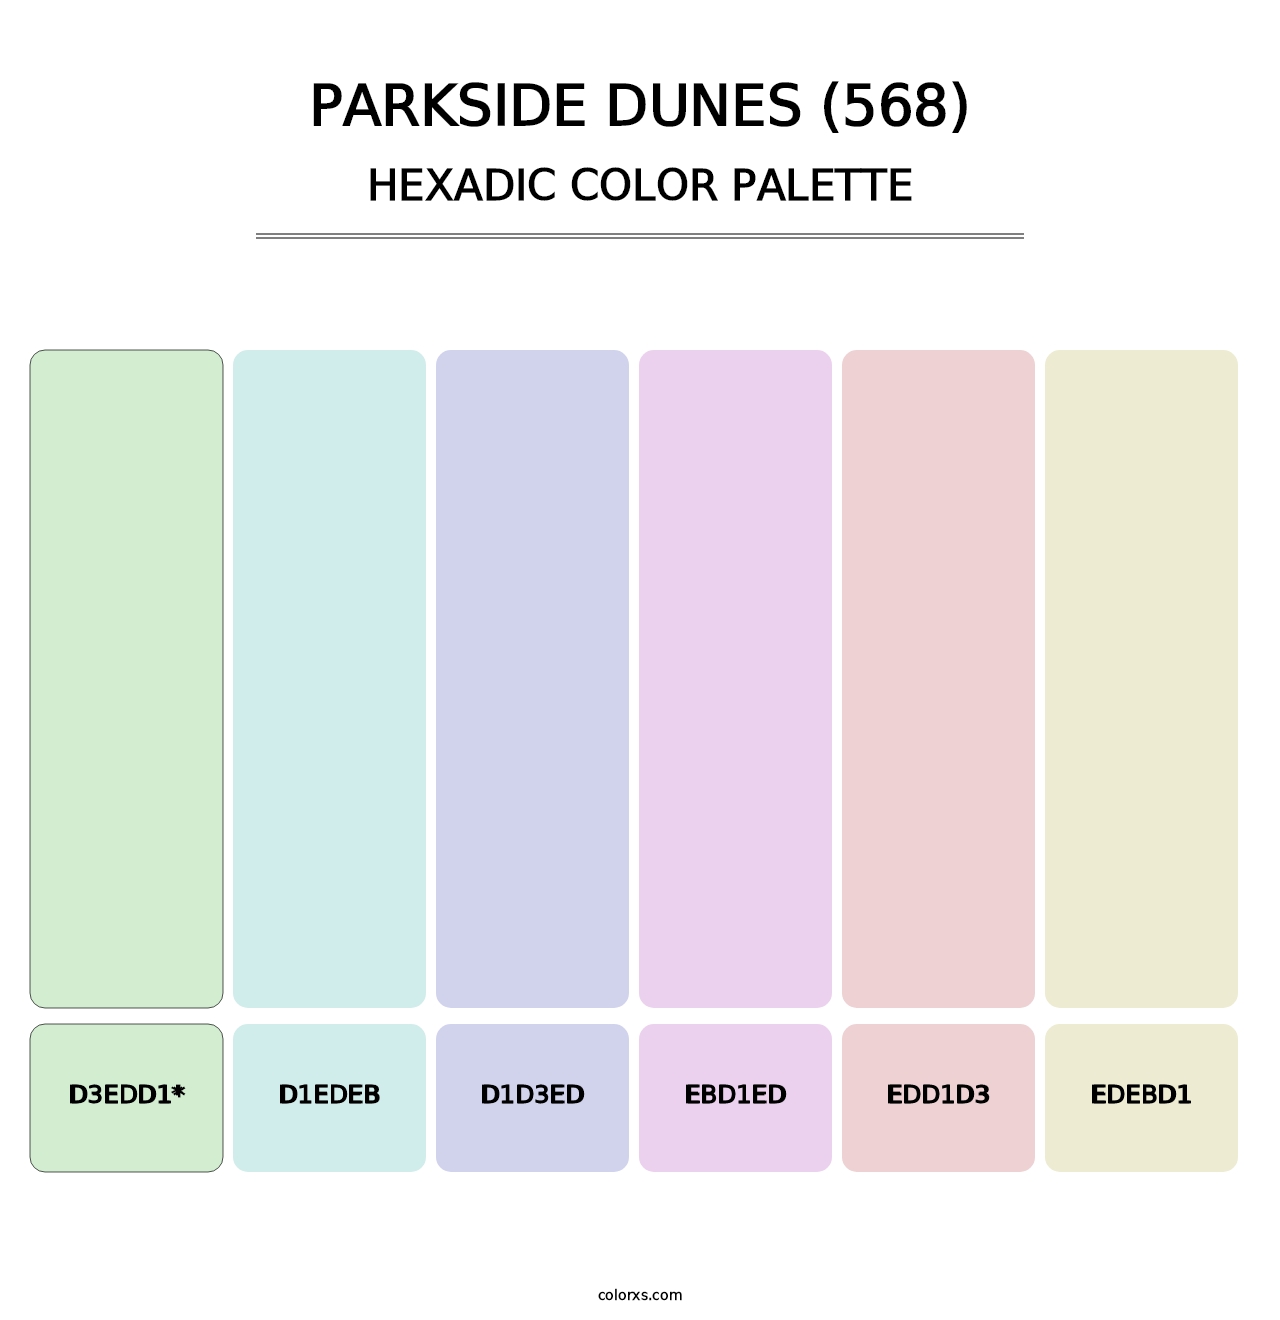 Parkside Dunes (568) - Hexadic Color Palette